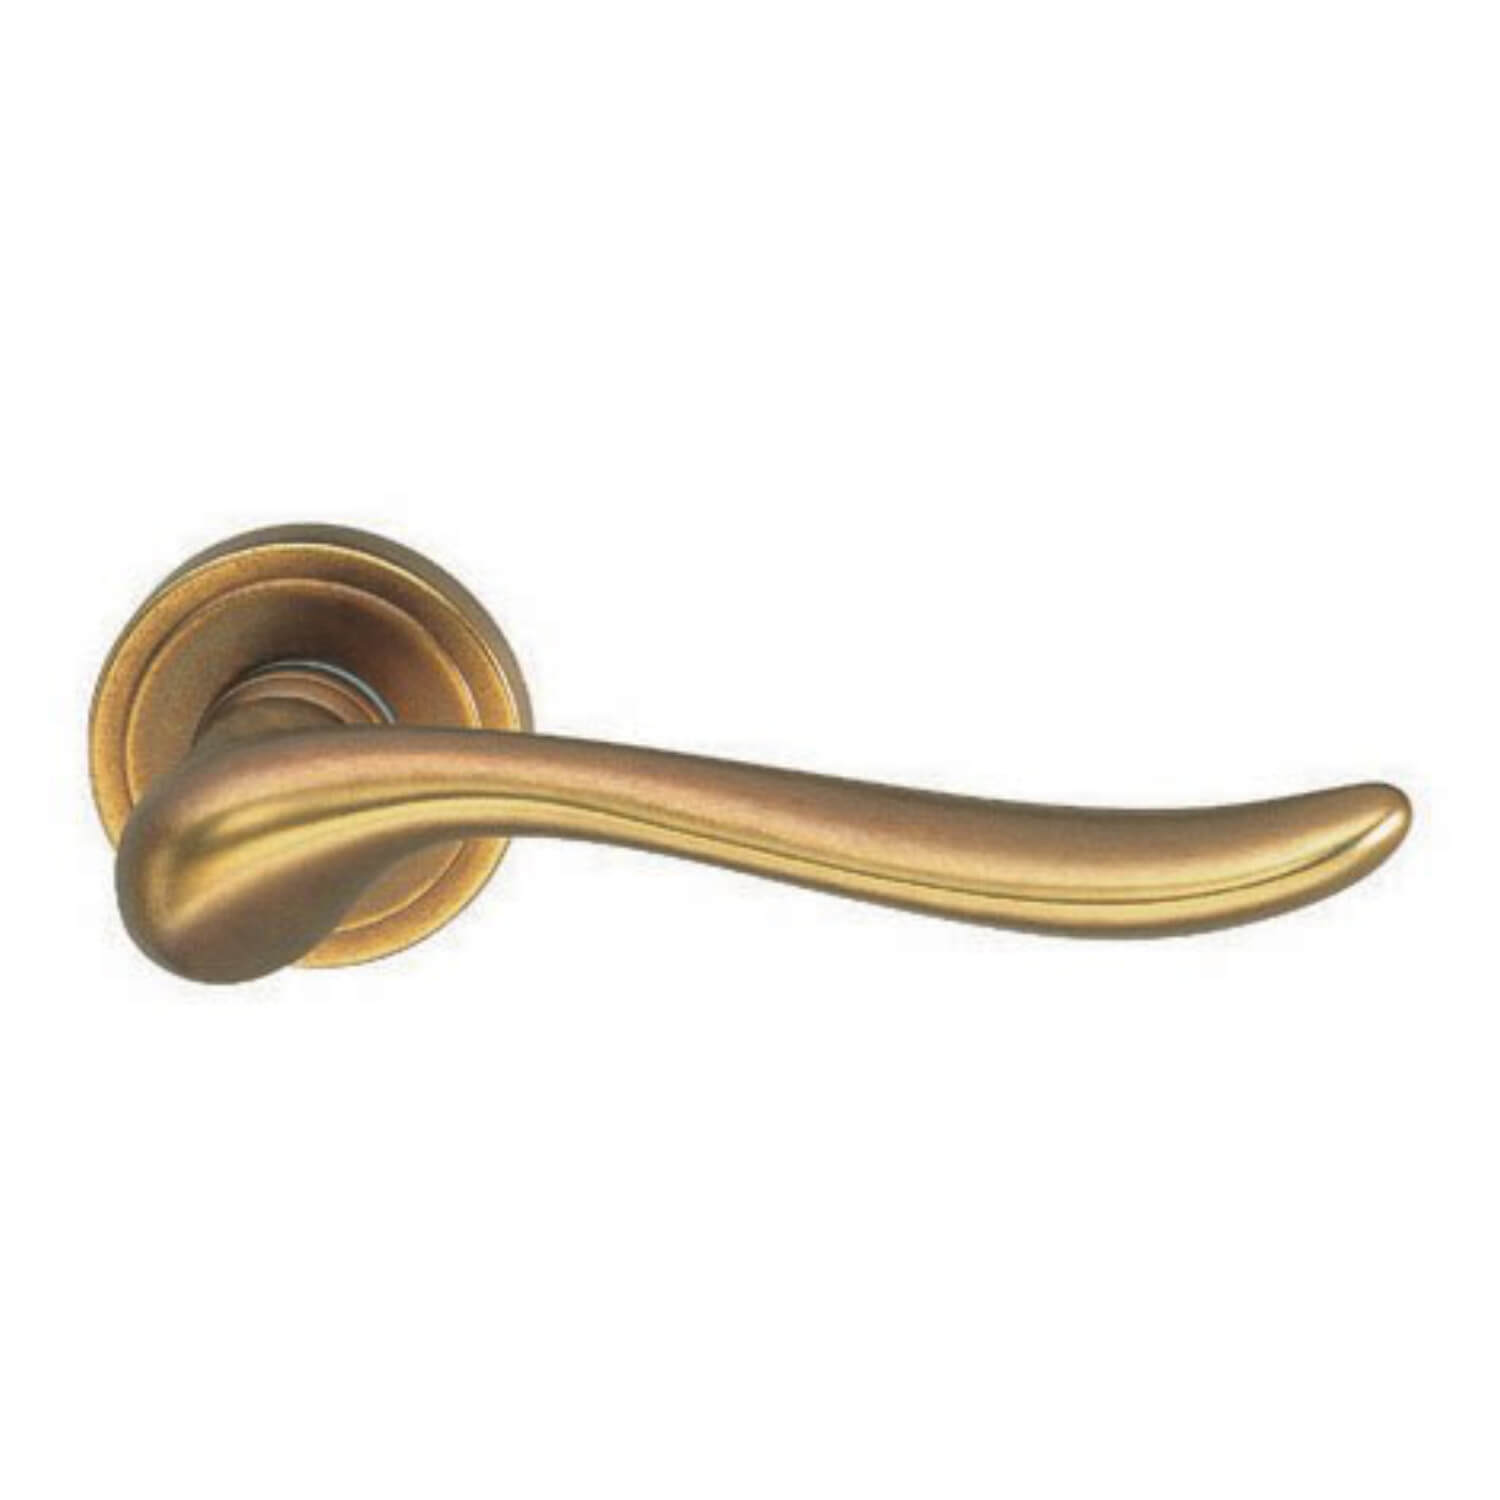 Door handle with privacy lock - Interior - Brushed Brass - Model H198 Mizar